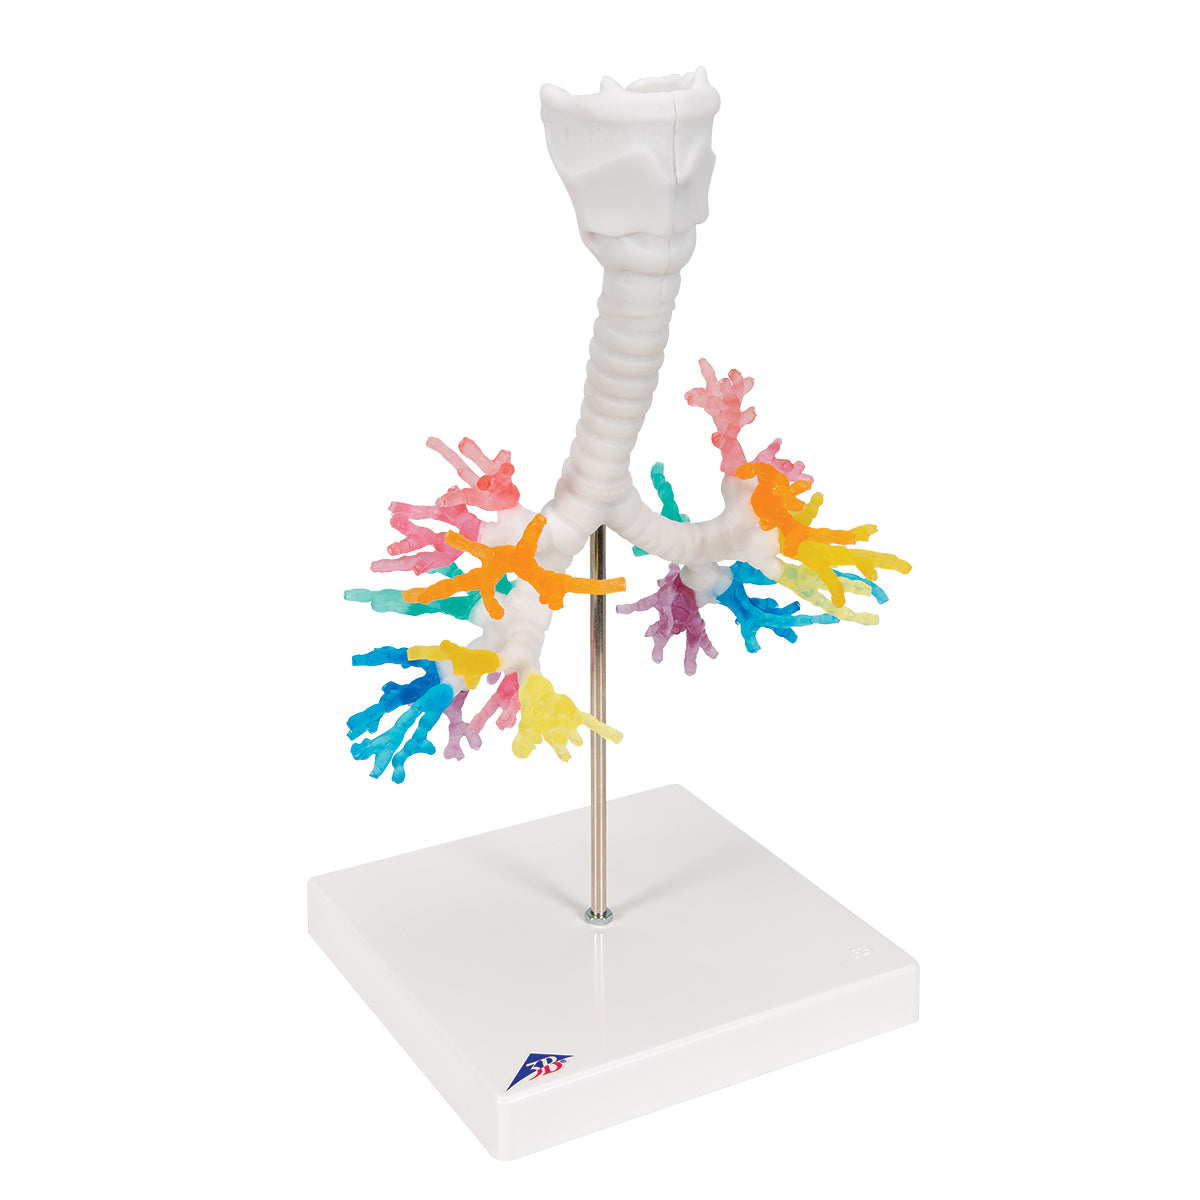 CT bronchi with larynx, 3D model via tomographic data